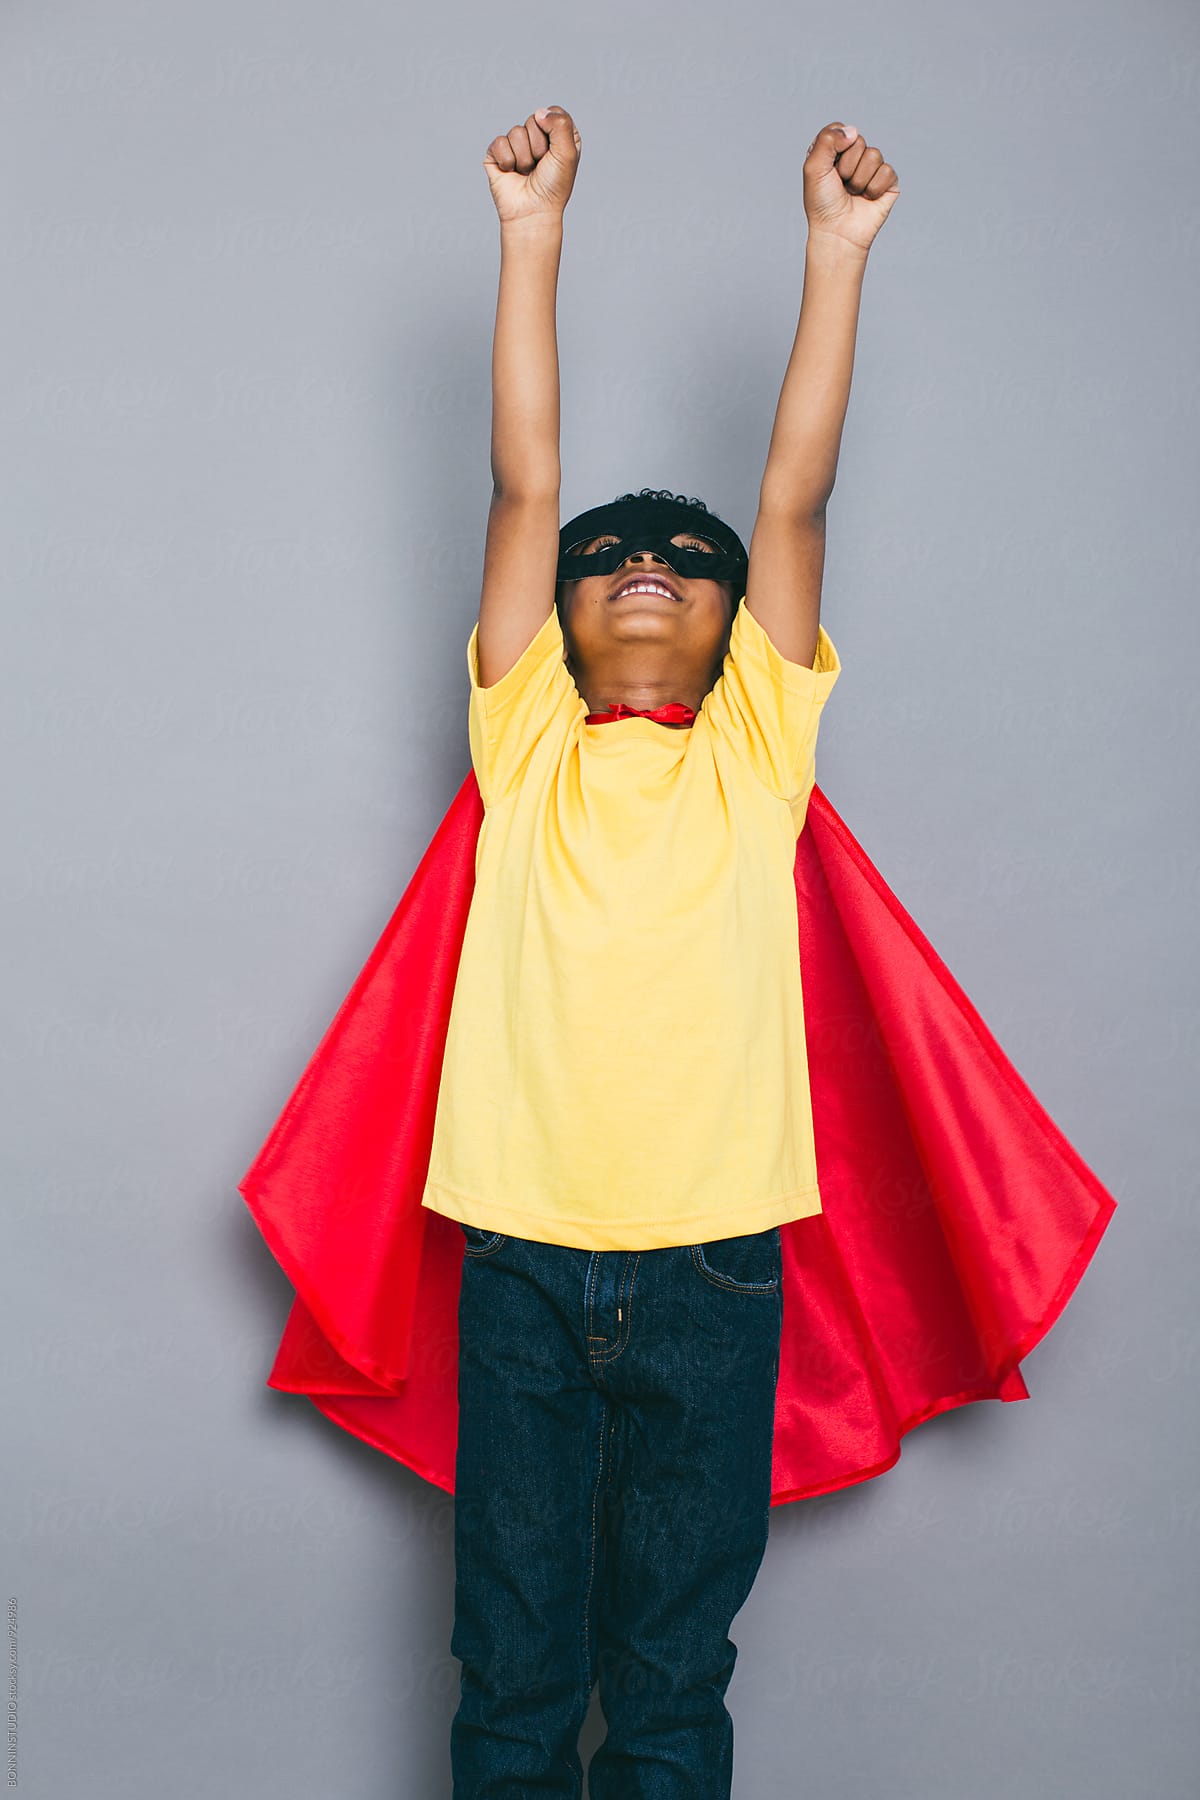 Funny little boy with Superhero costume.